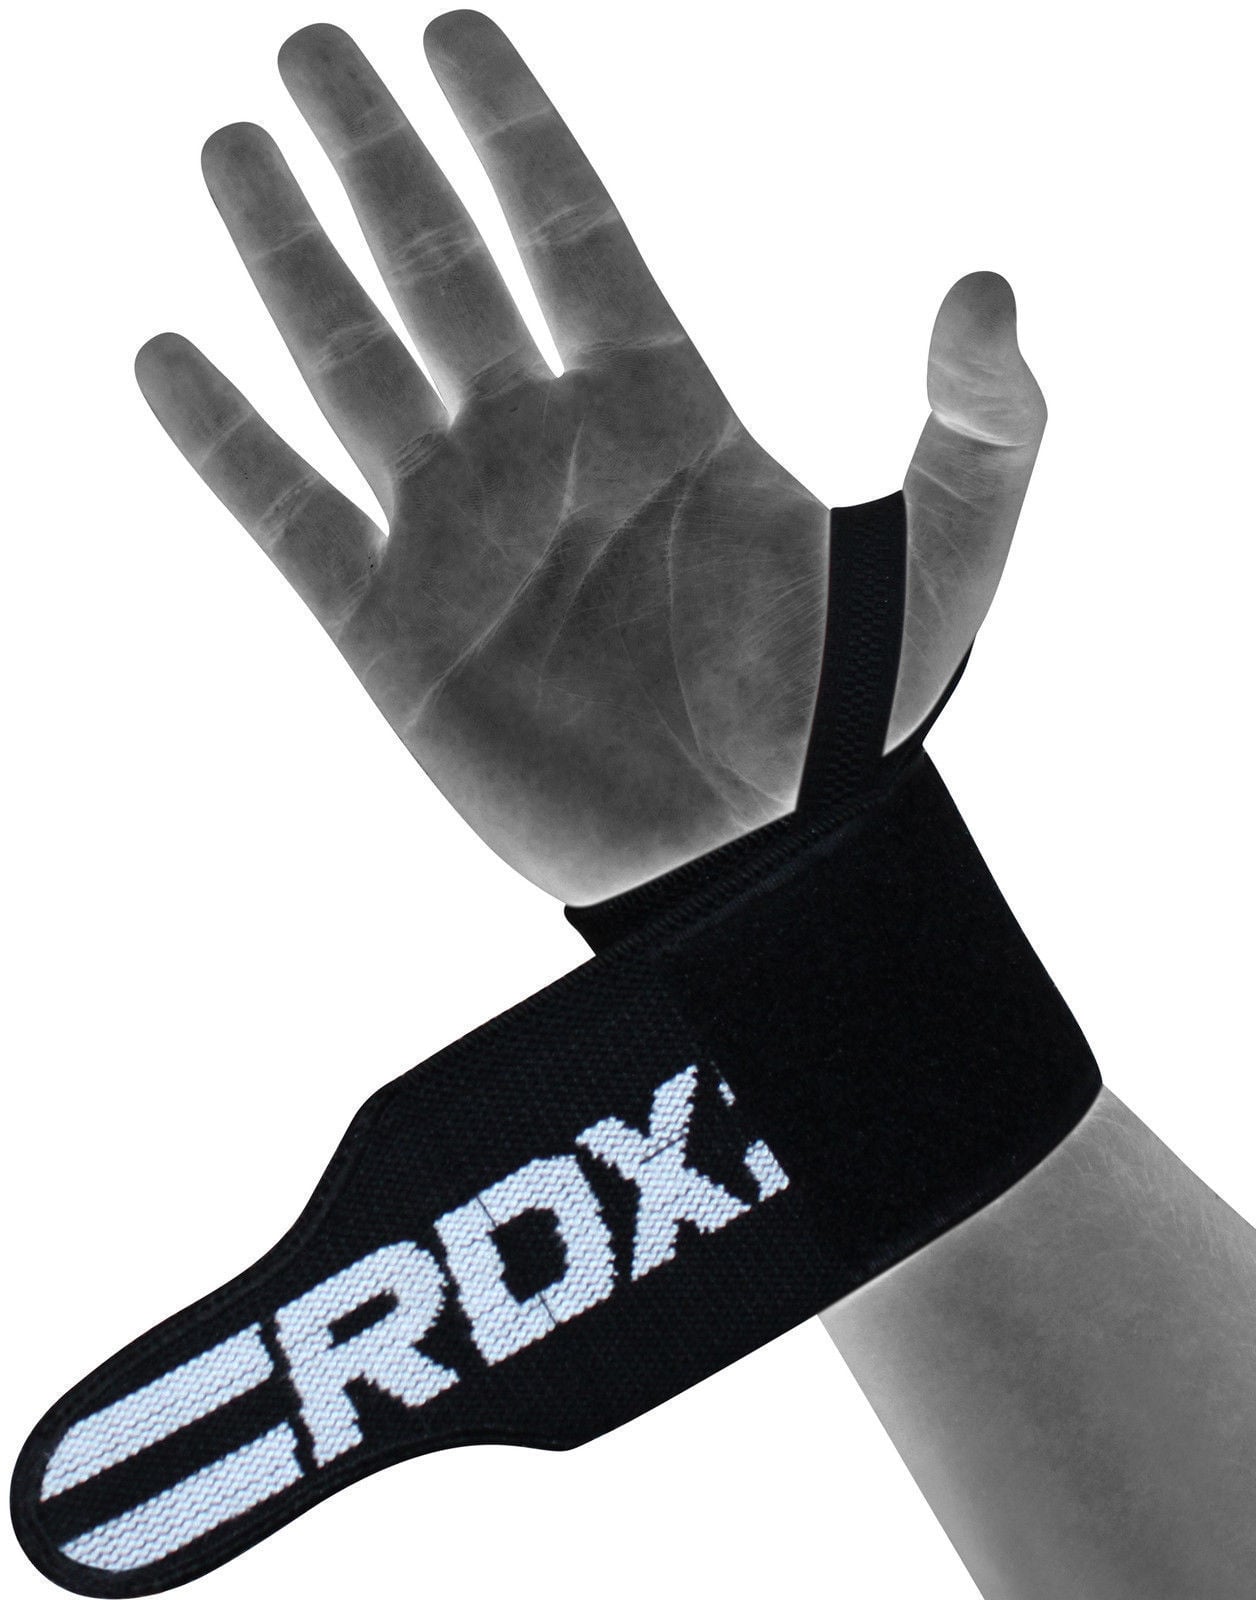 RDX weight lifting 8 Figure Strap – RDX Sports